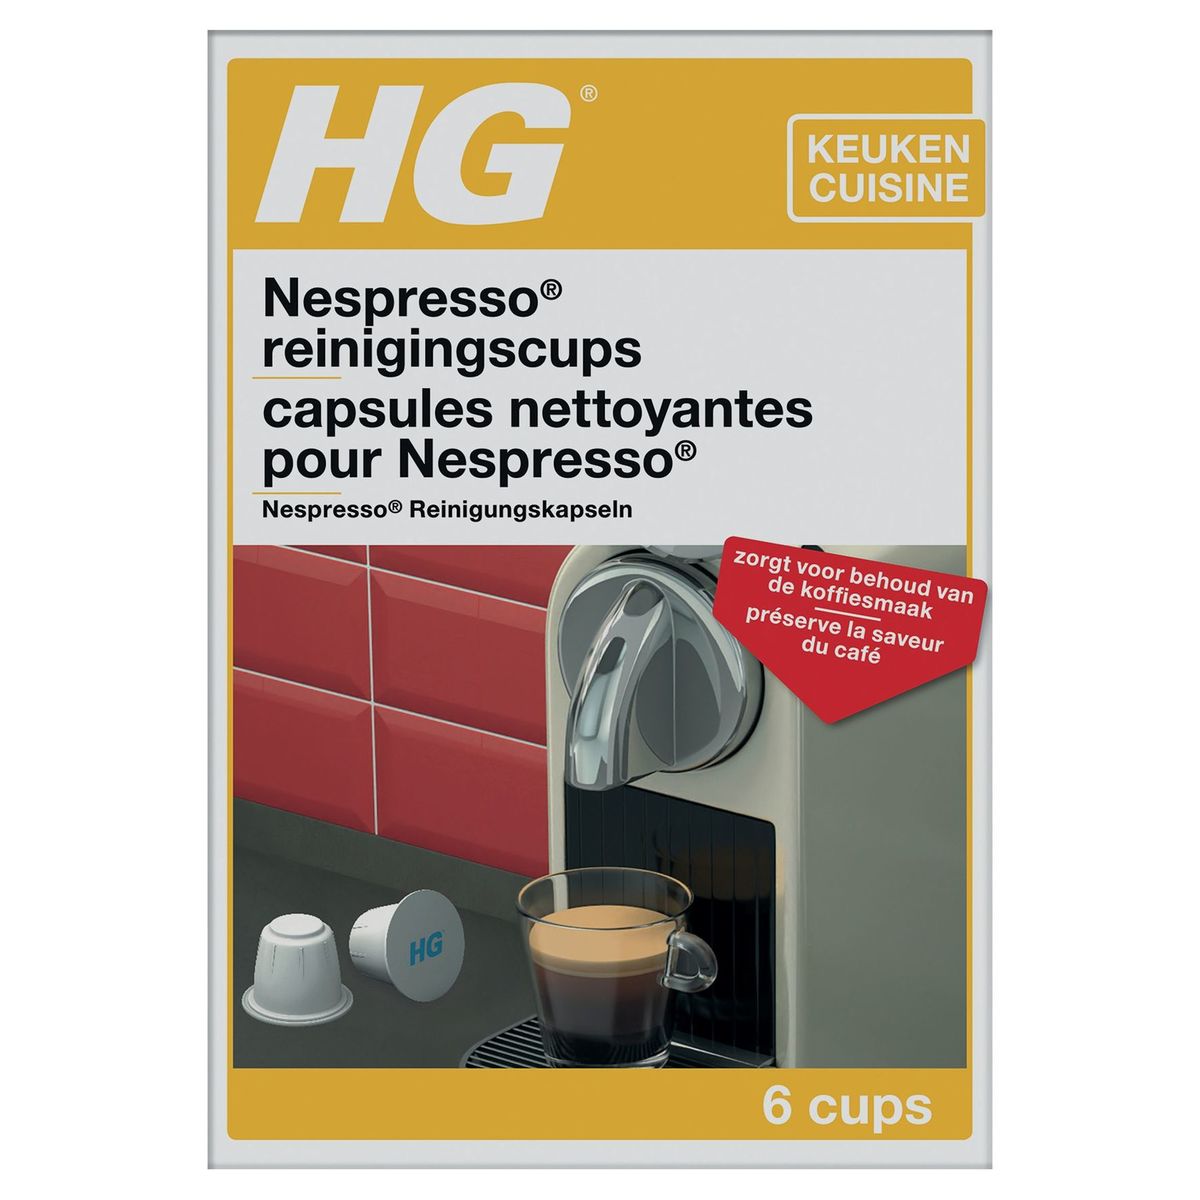 HG Capsules Nettoyantes pour les Machines Nespresso 6 x 3 g